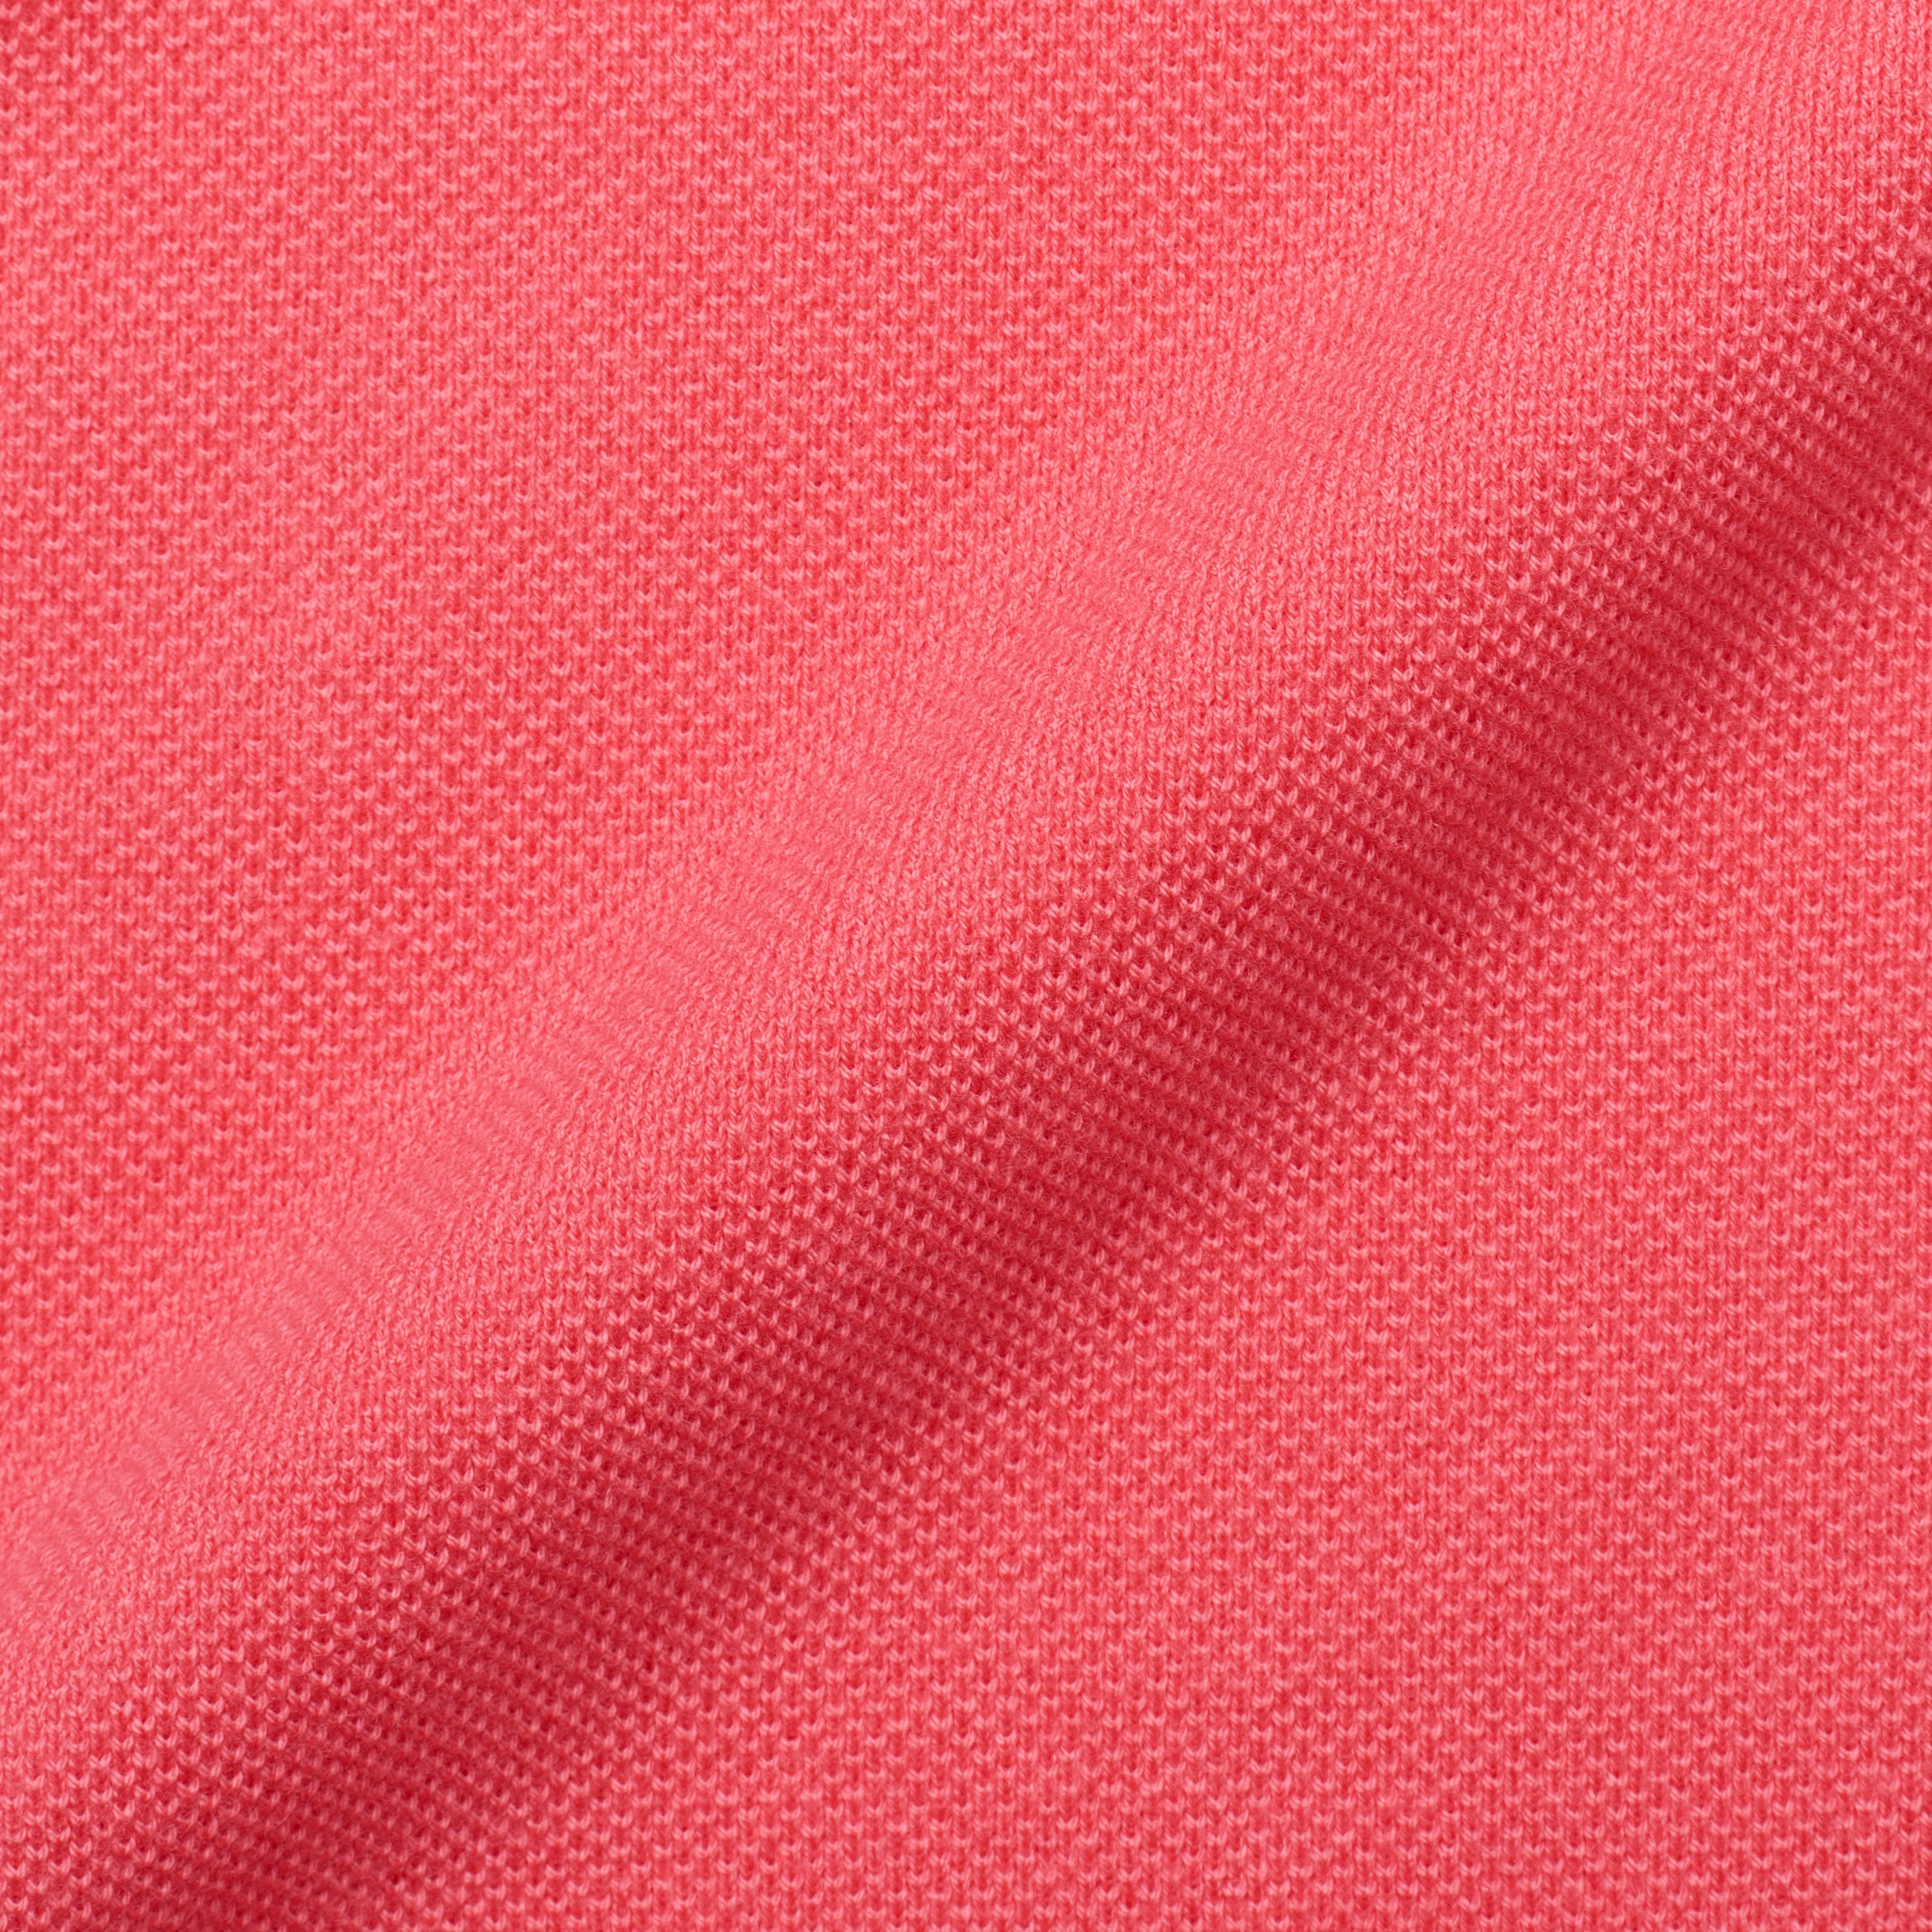 FEDELI "Tommy" Dark Pink Cotton Short Sleeve Pique Polo Shirt 50 NEW US M FEDELI